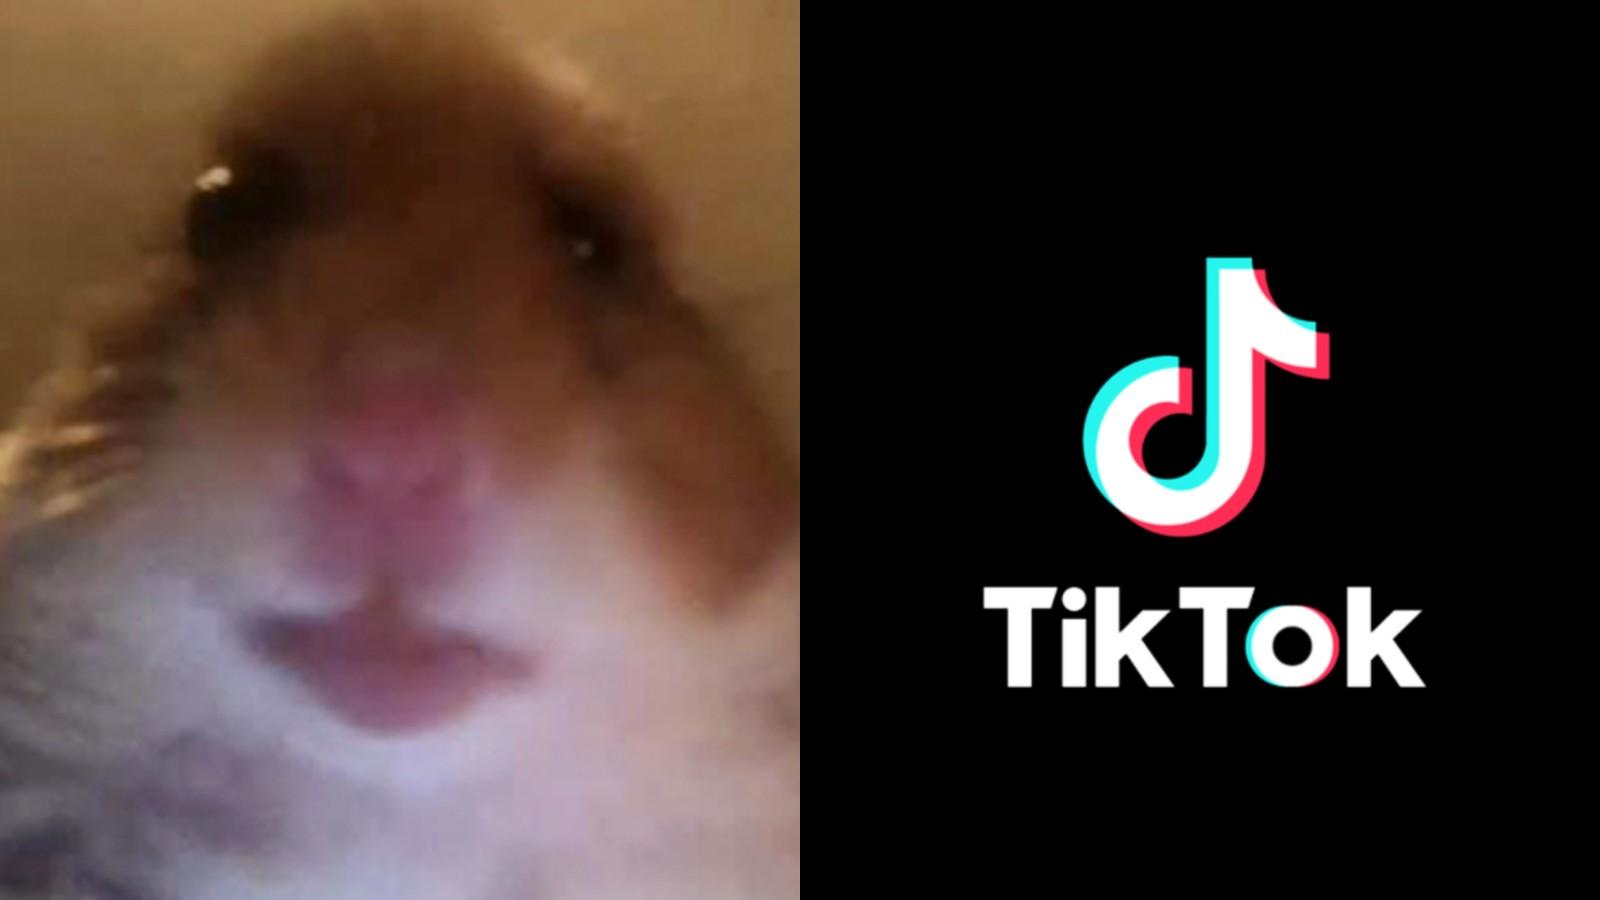 Hamster Cult meme picture next to the TikTok logo